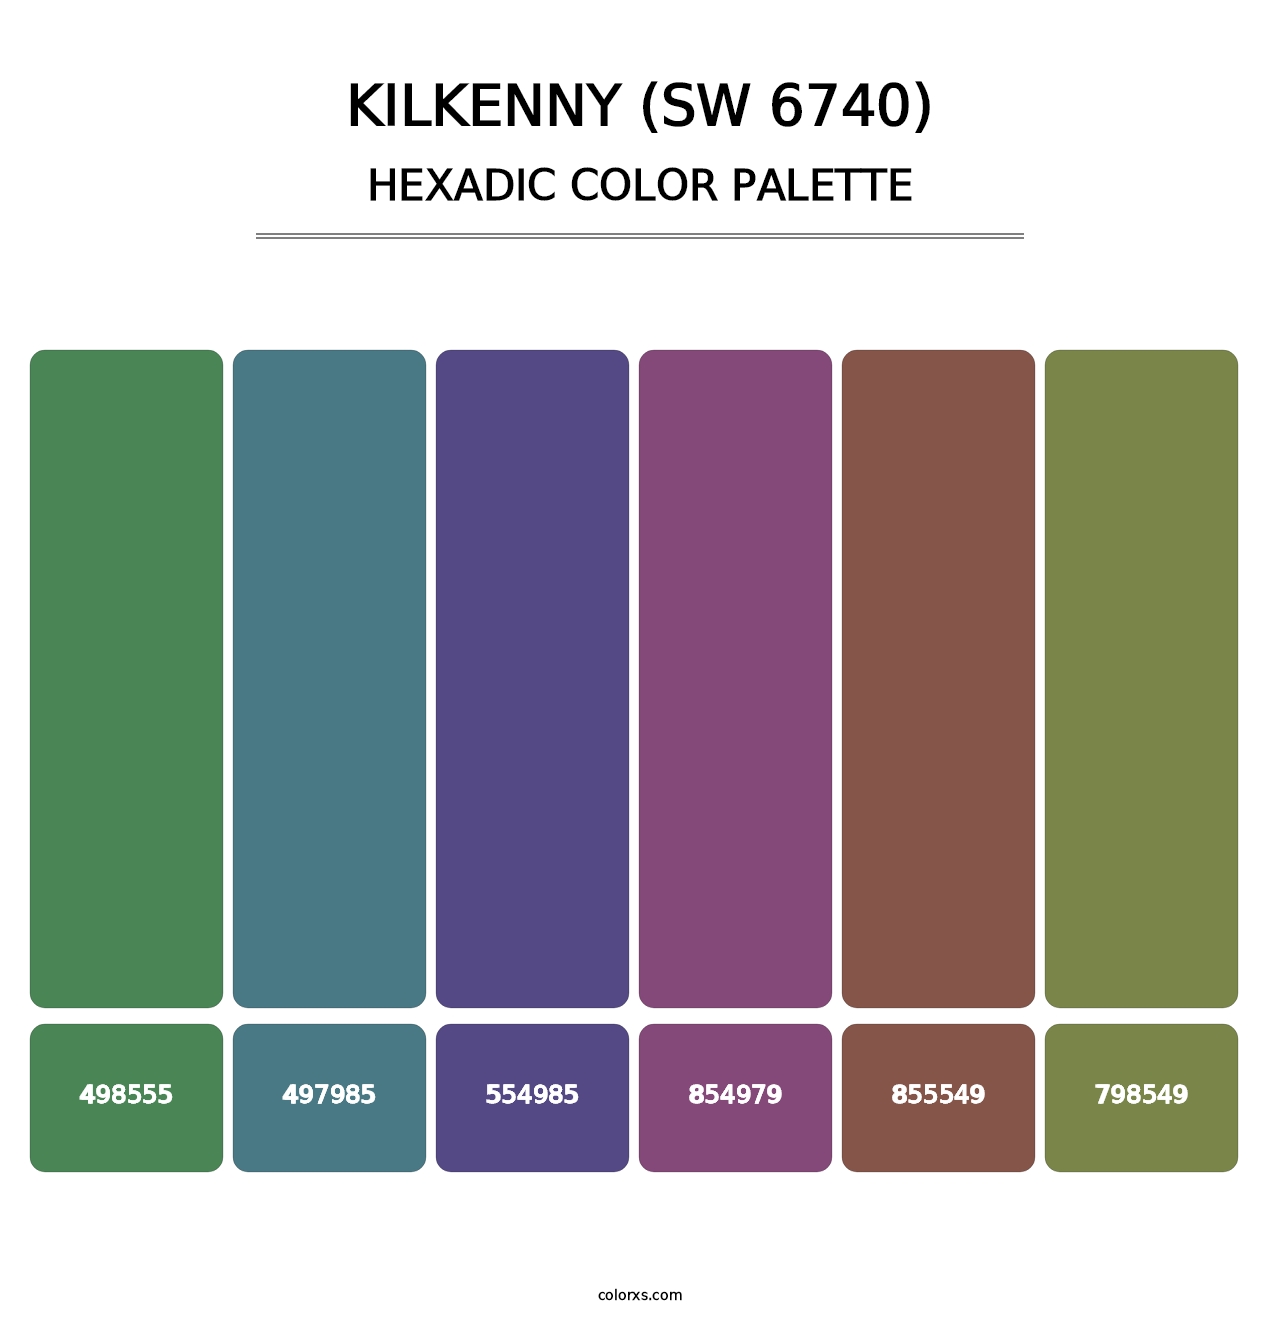 Kilkenny (SW 6740) - Hexadic Color Palette